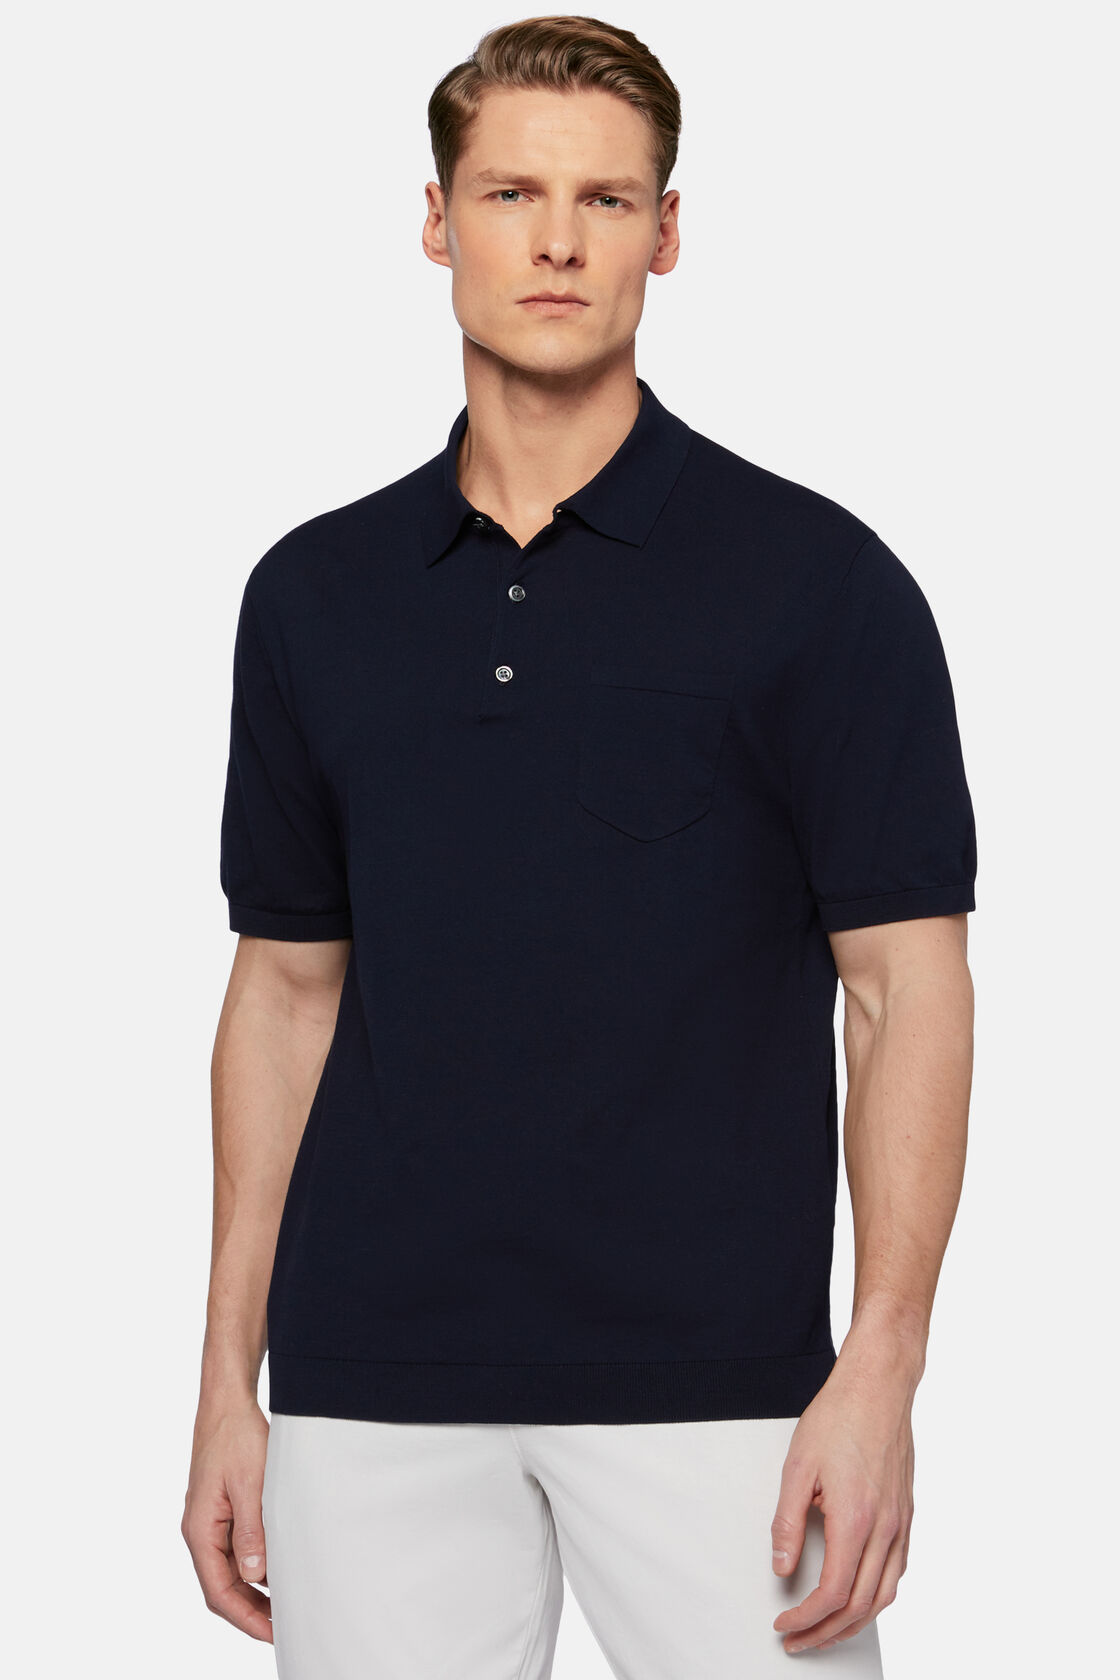 Marineblaues Strick-Poloshirt Aus Baumwollkrepp, Navy blau, hi-res